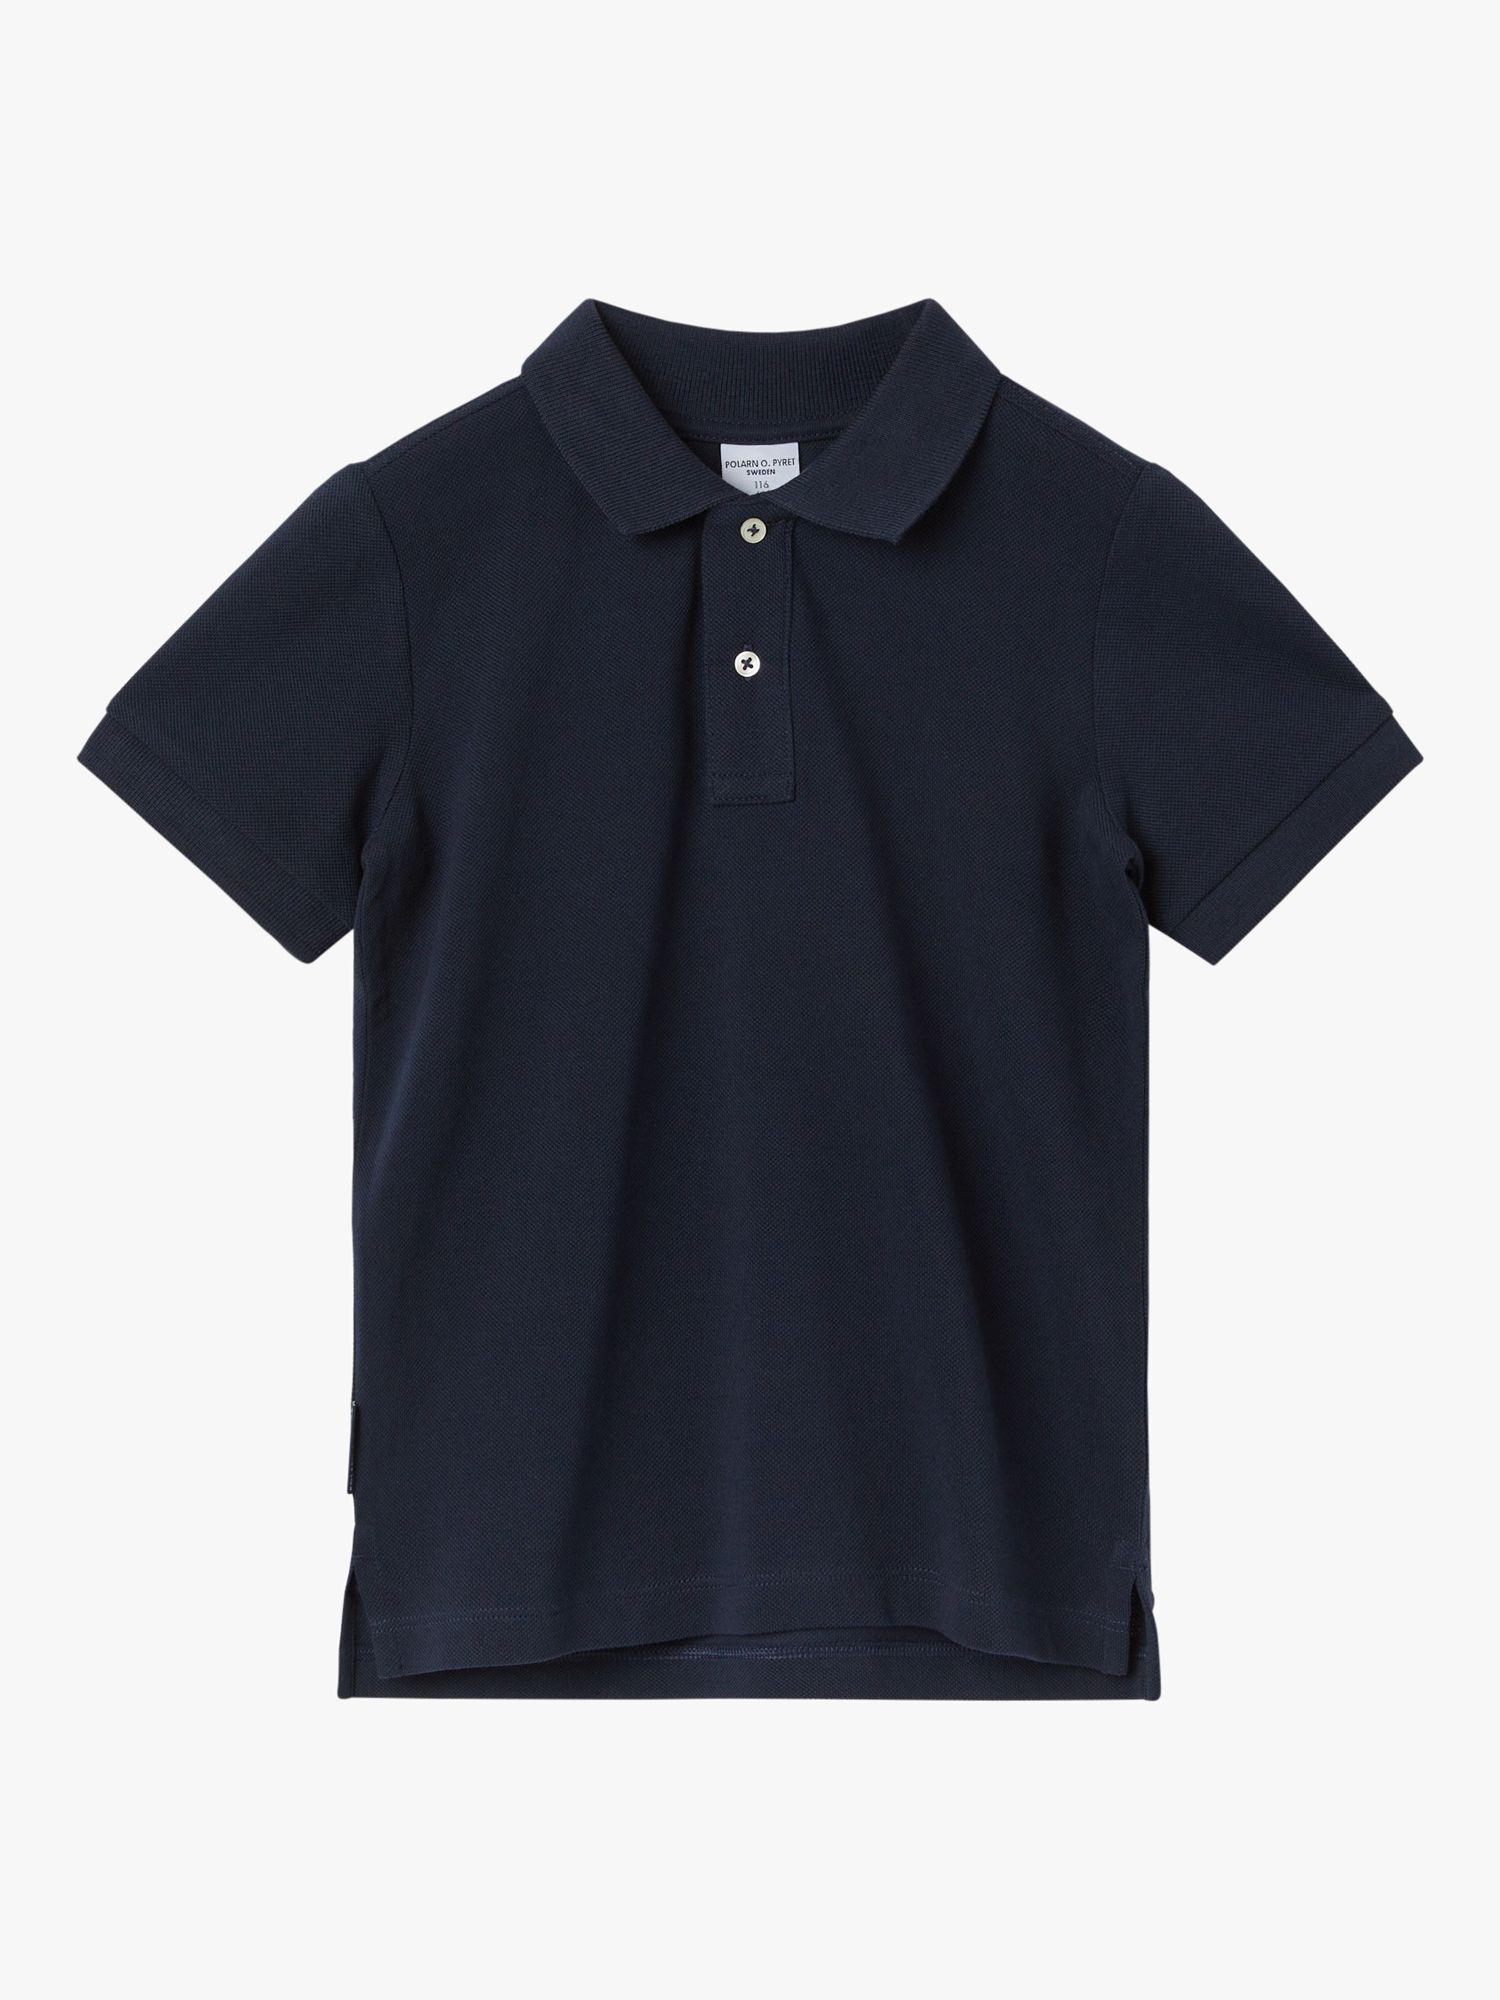 Buy Polarn O. Pyret Kids' Organic Cotton Stripe Polo Shirt, Blue Online at johnlewis.com